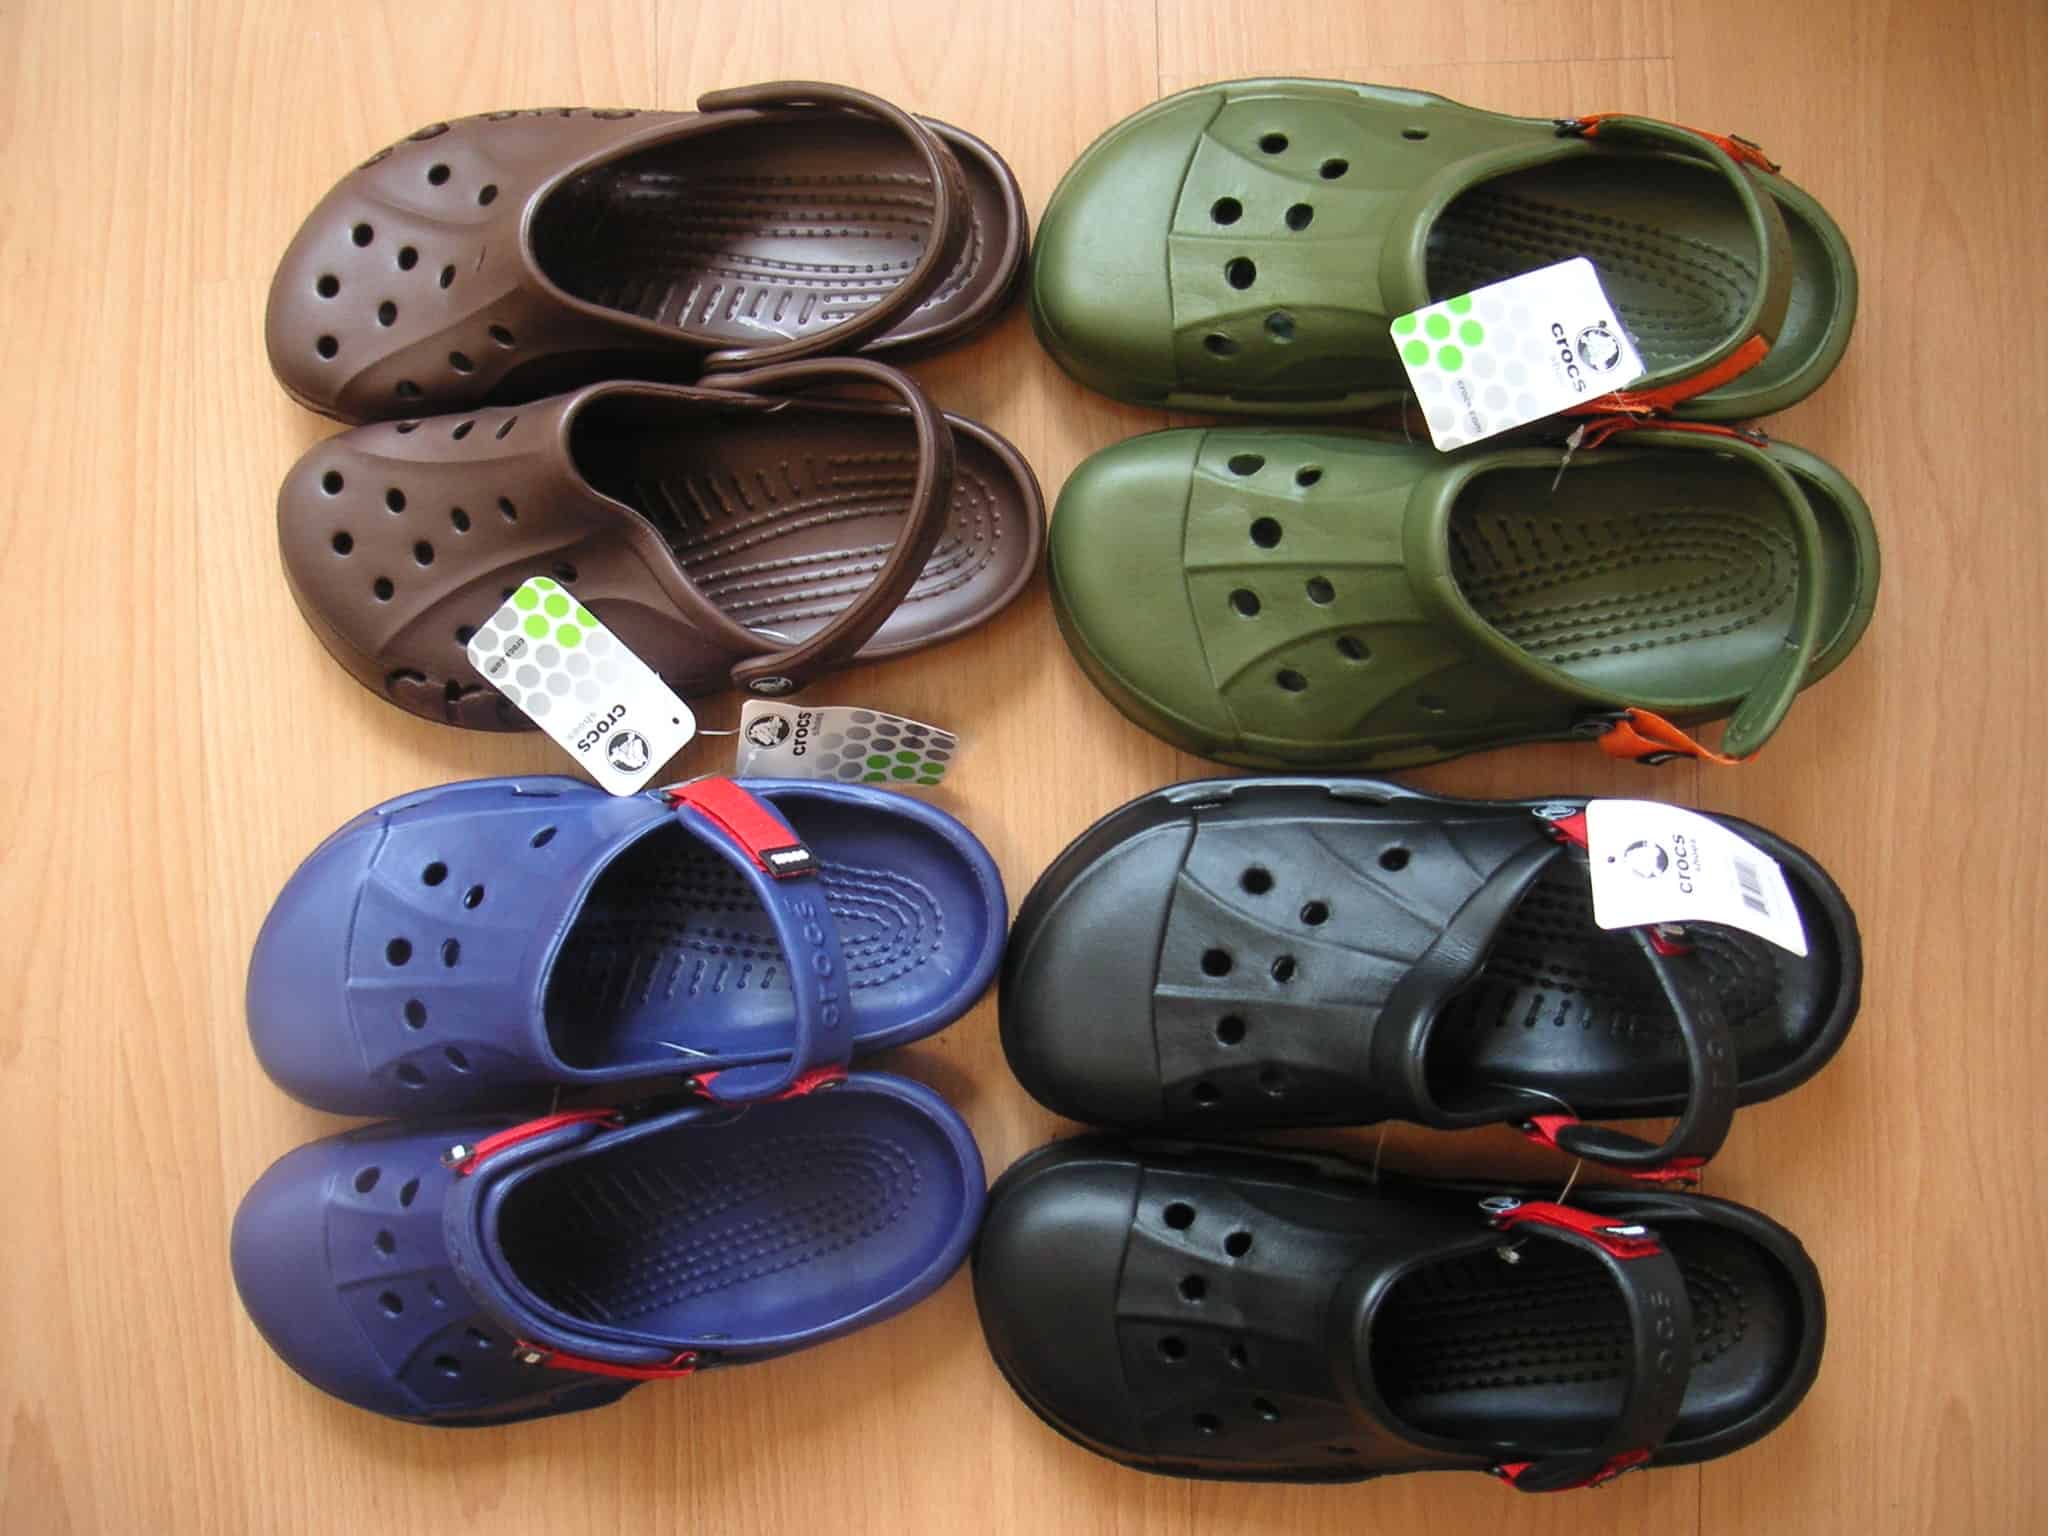 safety toe crocs